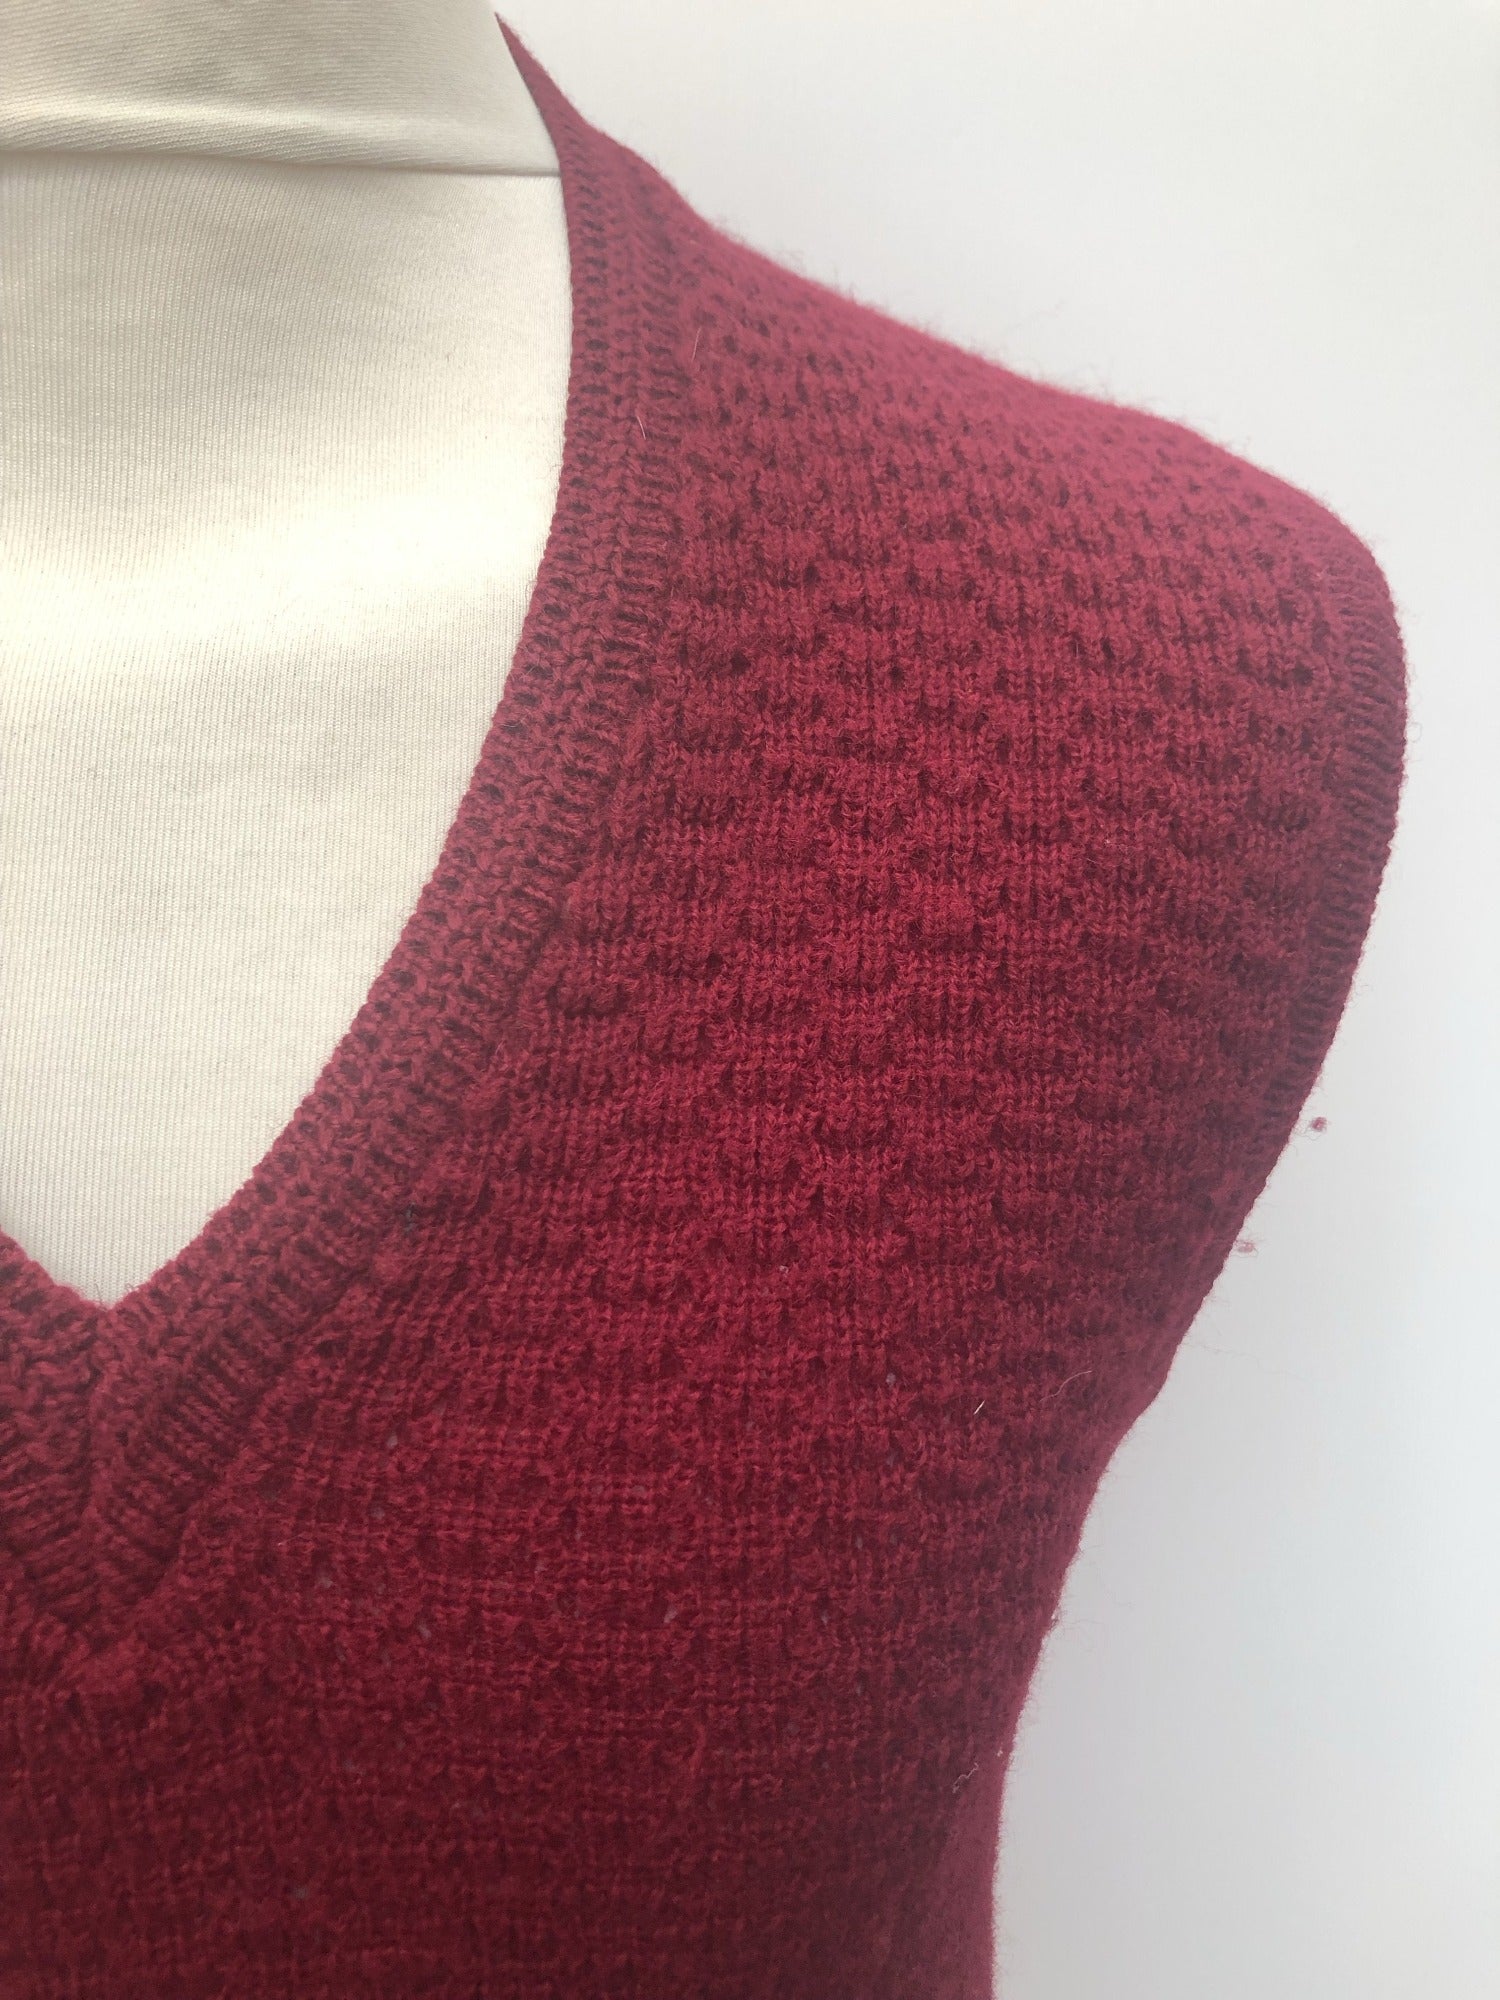 wool  vintage  vest  v neck  Urban Village Vintage  urban village  Tank Top  pick  patterned  pattern  mens  knitwear  knitted  knit  elasticated  burgundy  70s  1970s  100% Wool